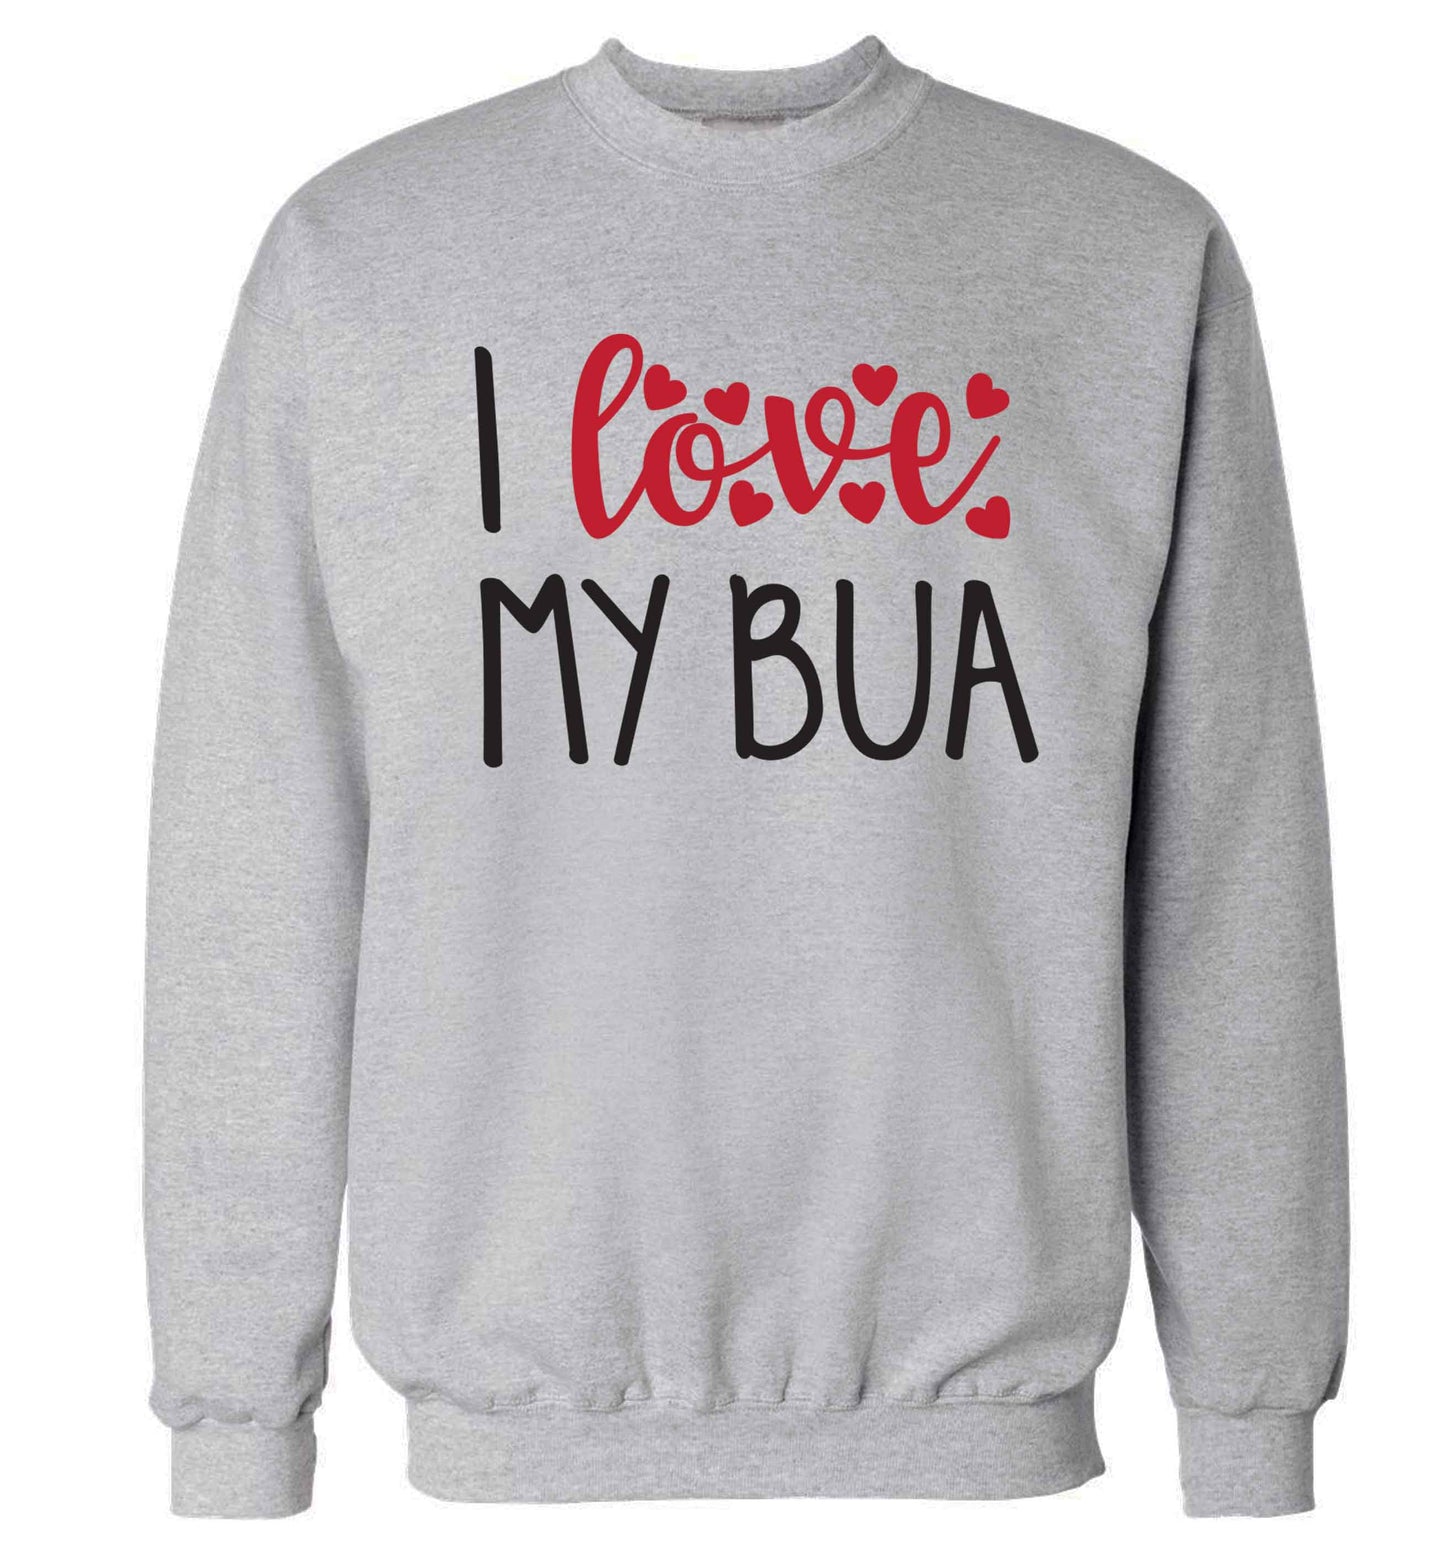 I love my bua Adult's unisex grey Sweater 2XL